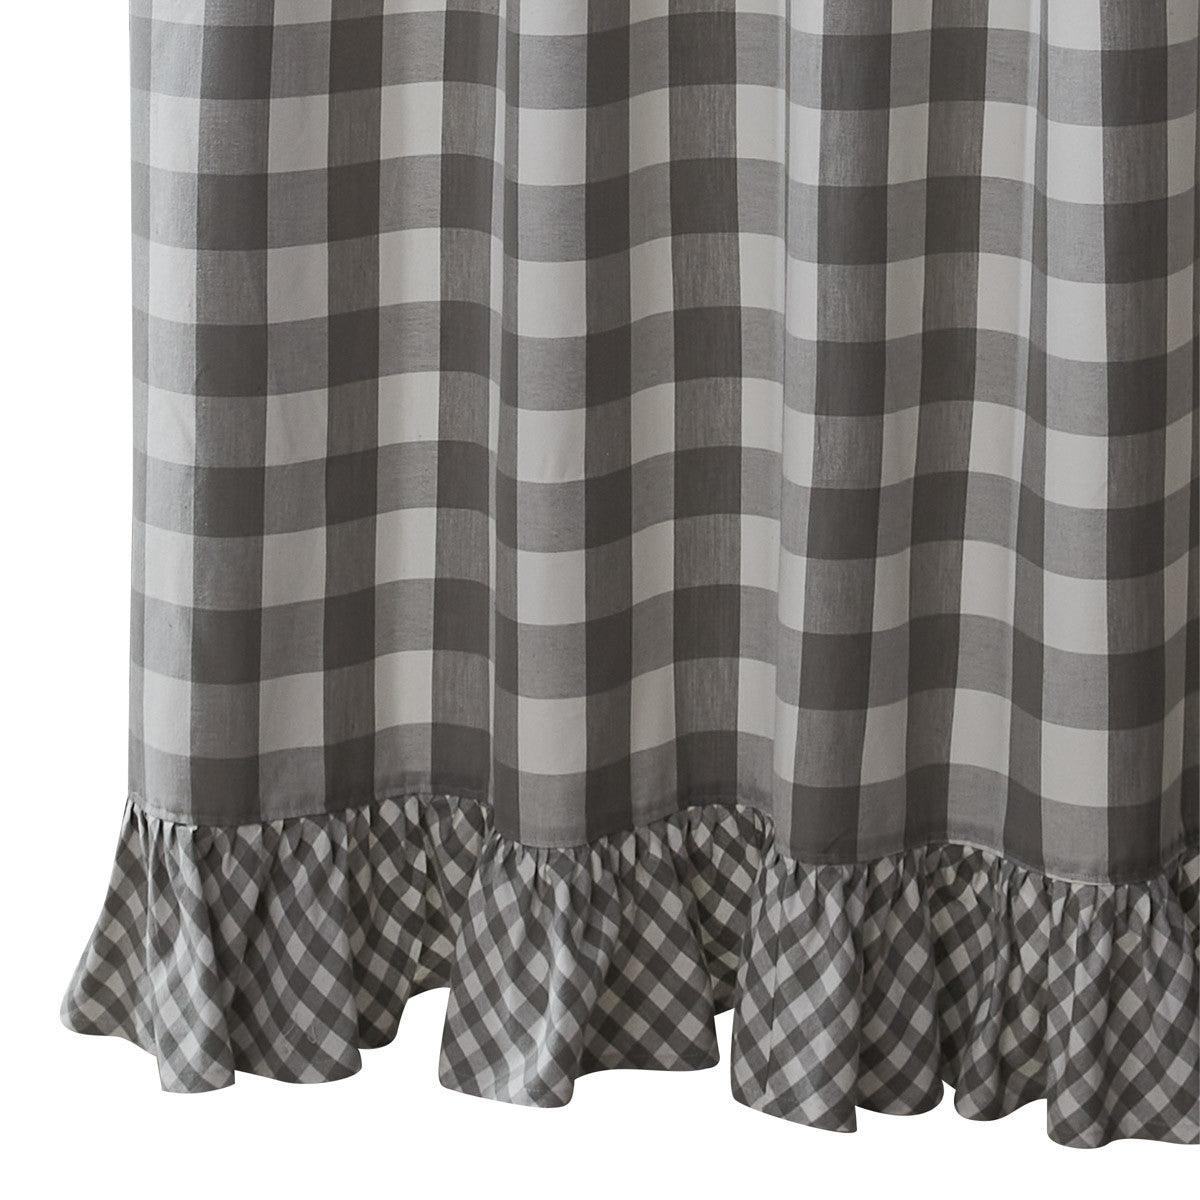 Wicklow Ruffled Shower Curtain - Dove Park Designs - The Fox Decor